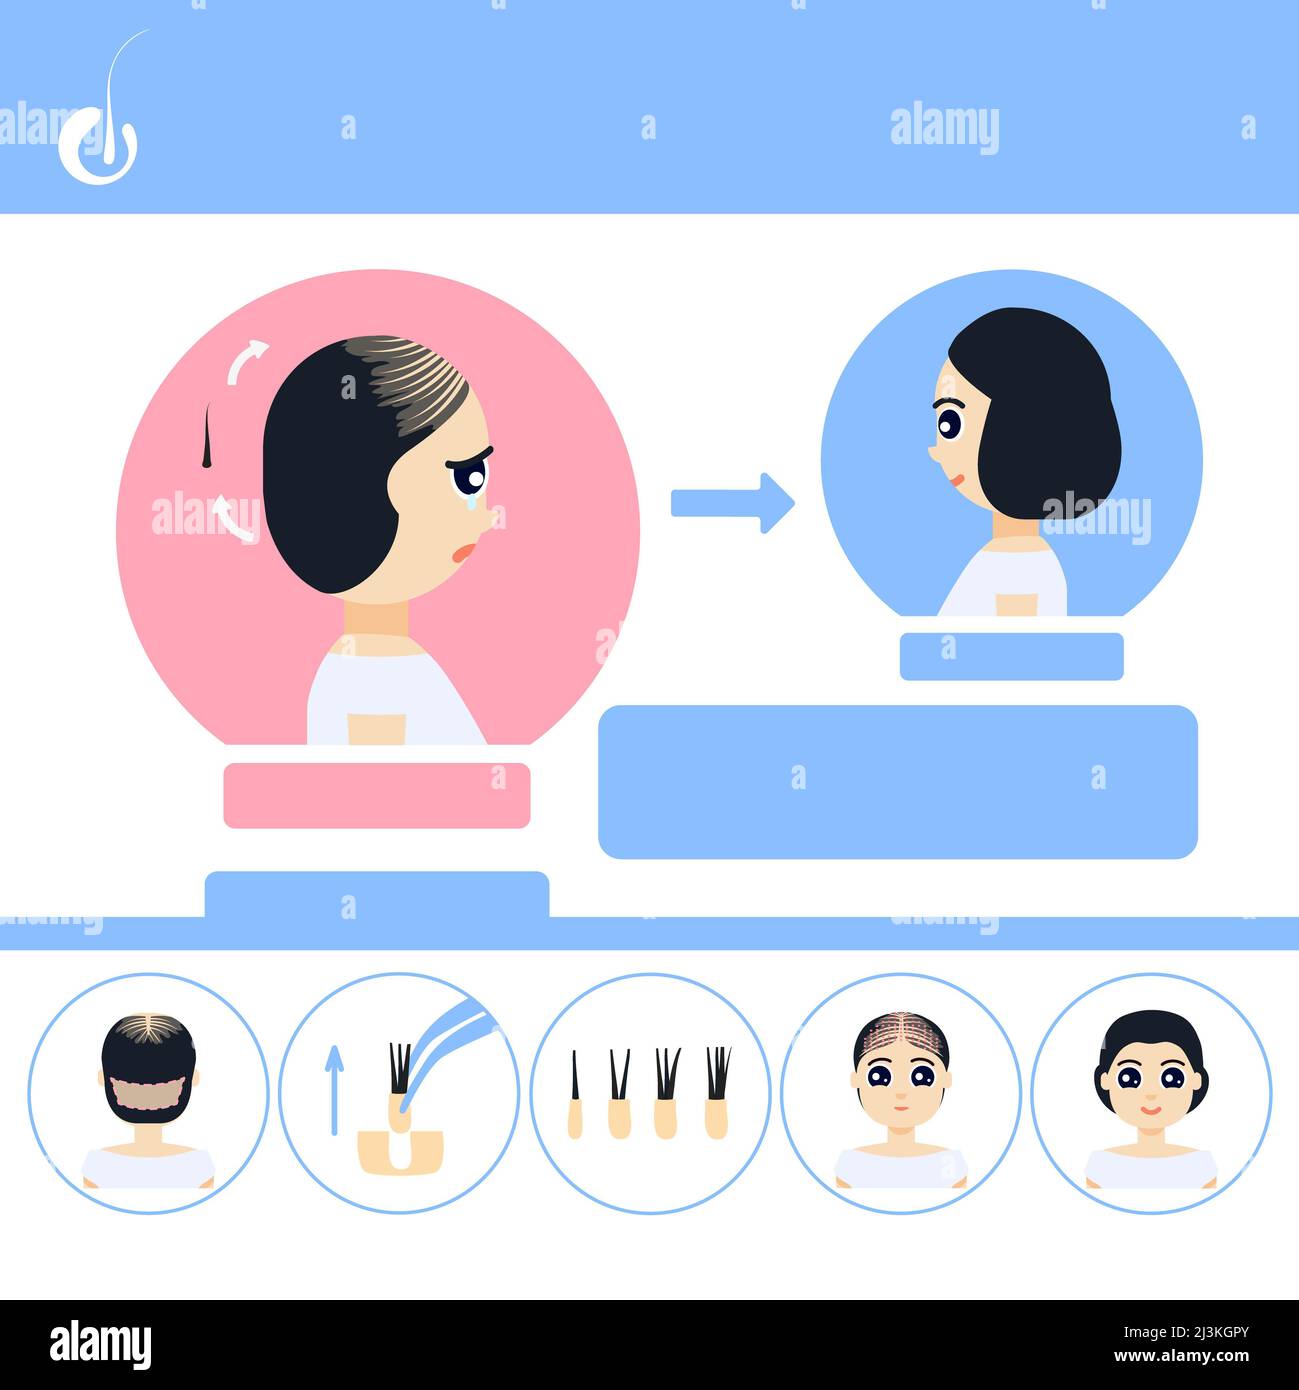 FUE hair transplantation in women, illustration Stock Photo